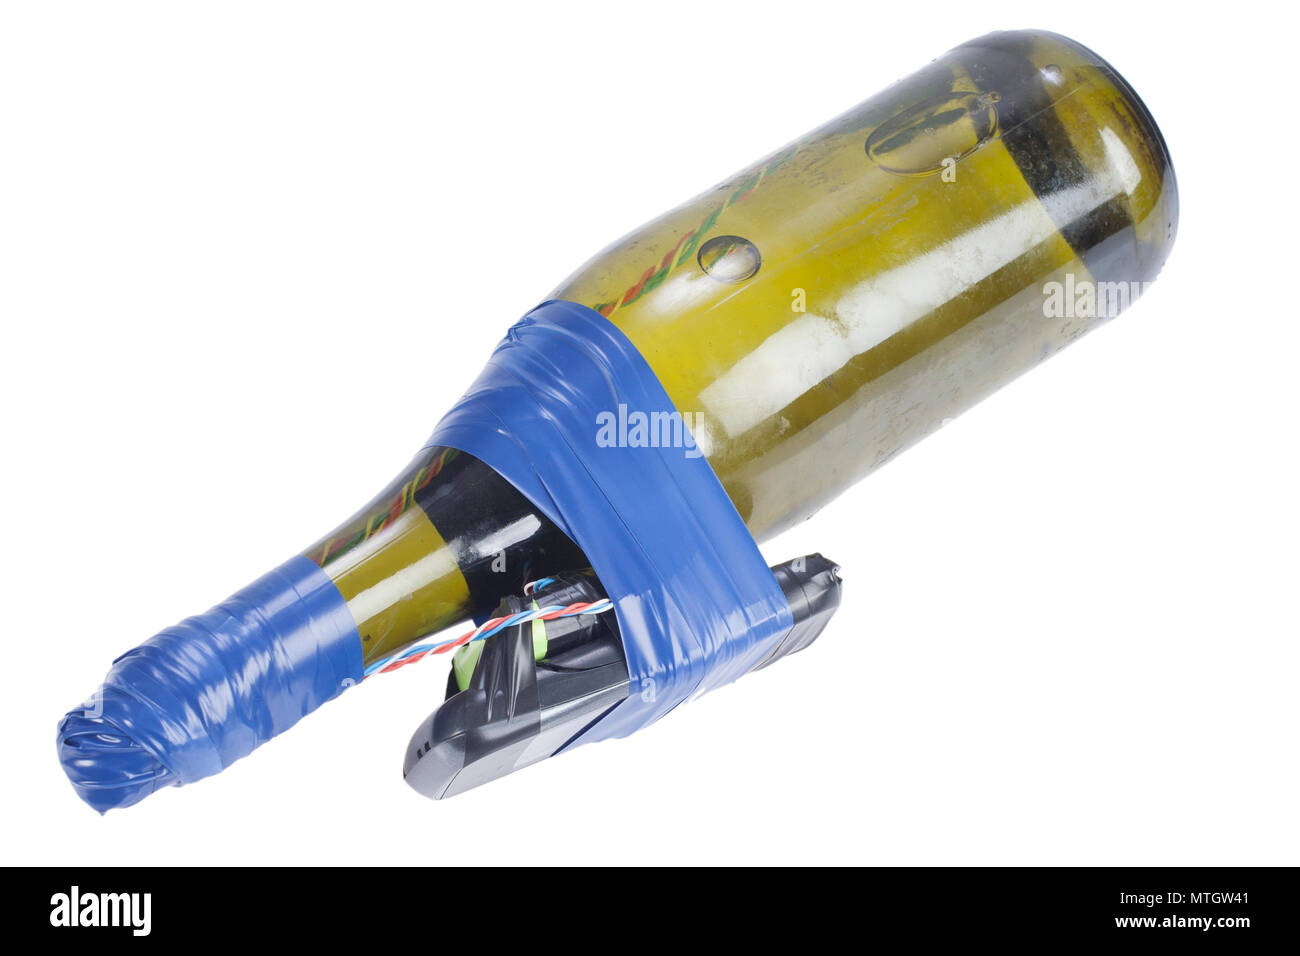 Terrorist weapon - Improvised Explosive Device isolated on white Stock Photo